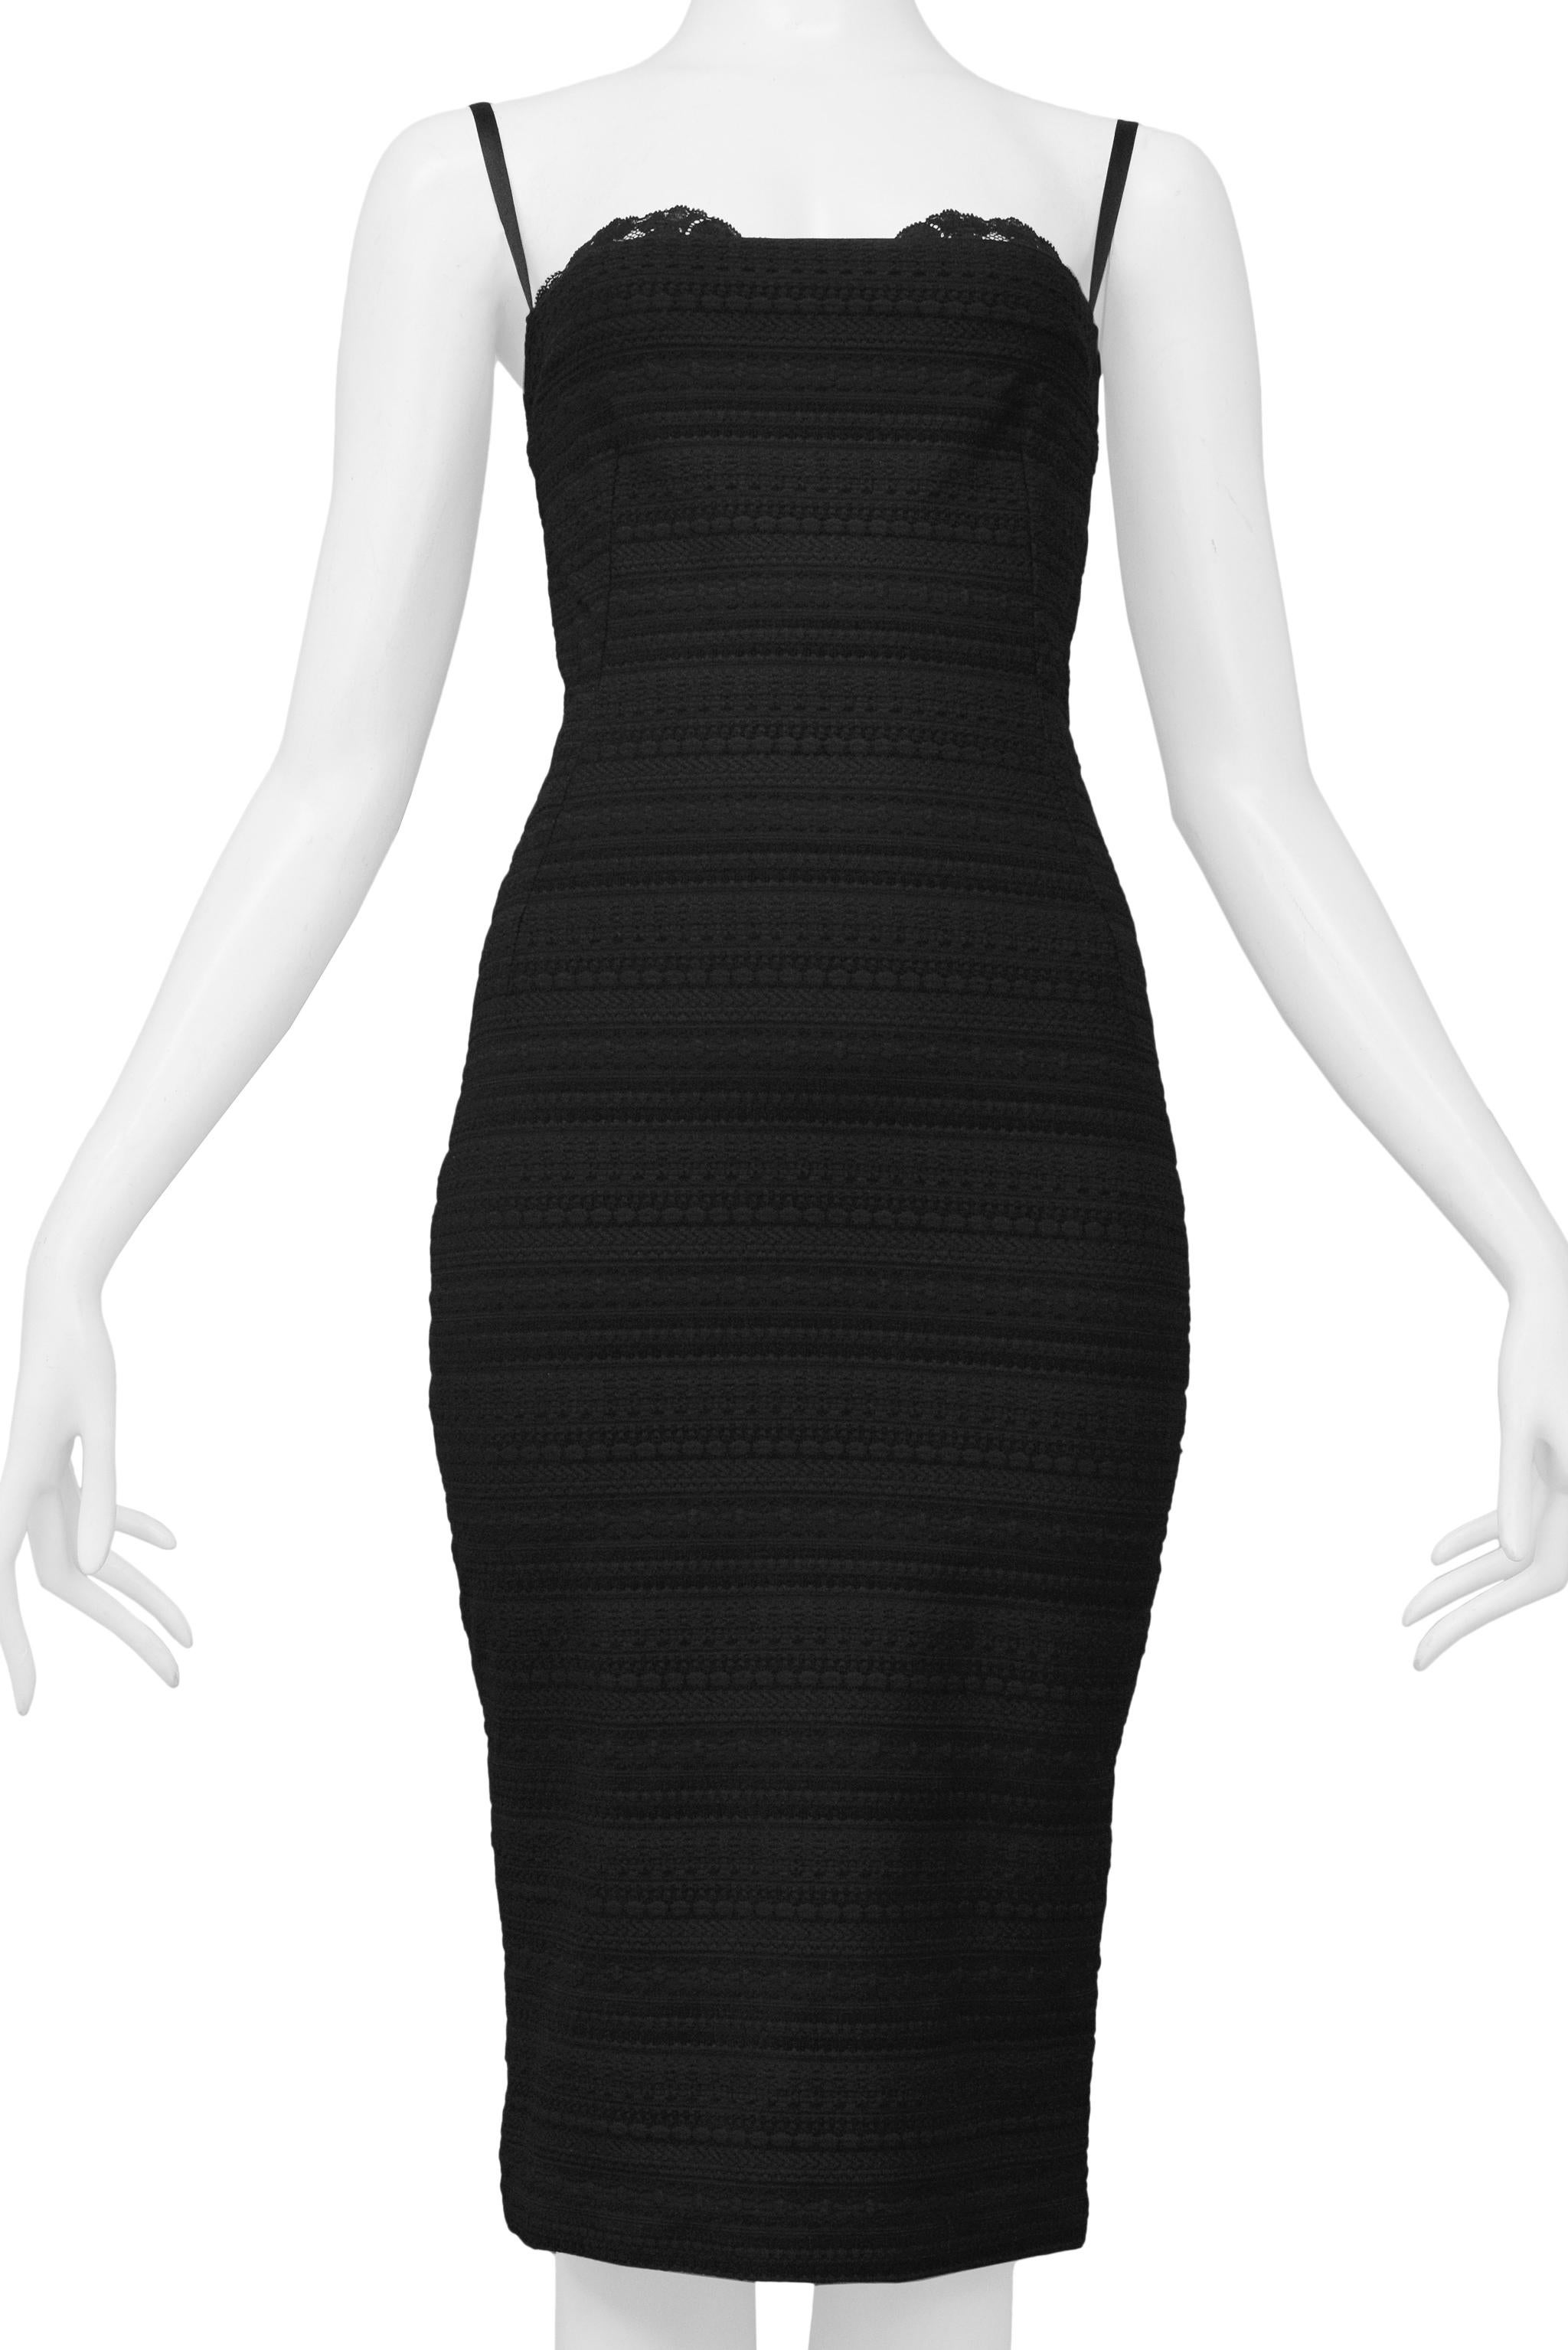 Dolce & Gabbana Black Stretch Lace Body-Con Dress 1